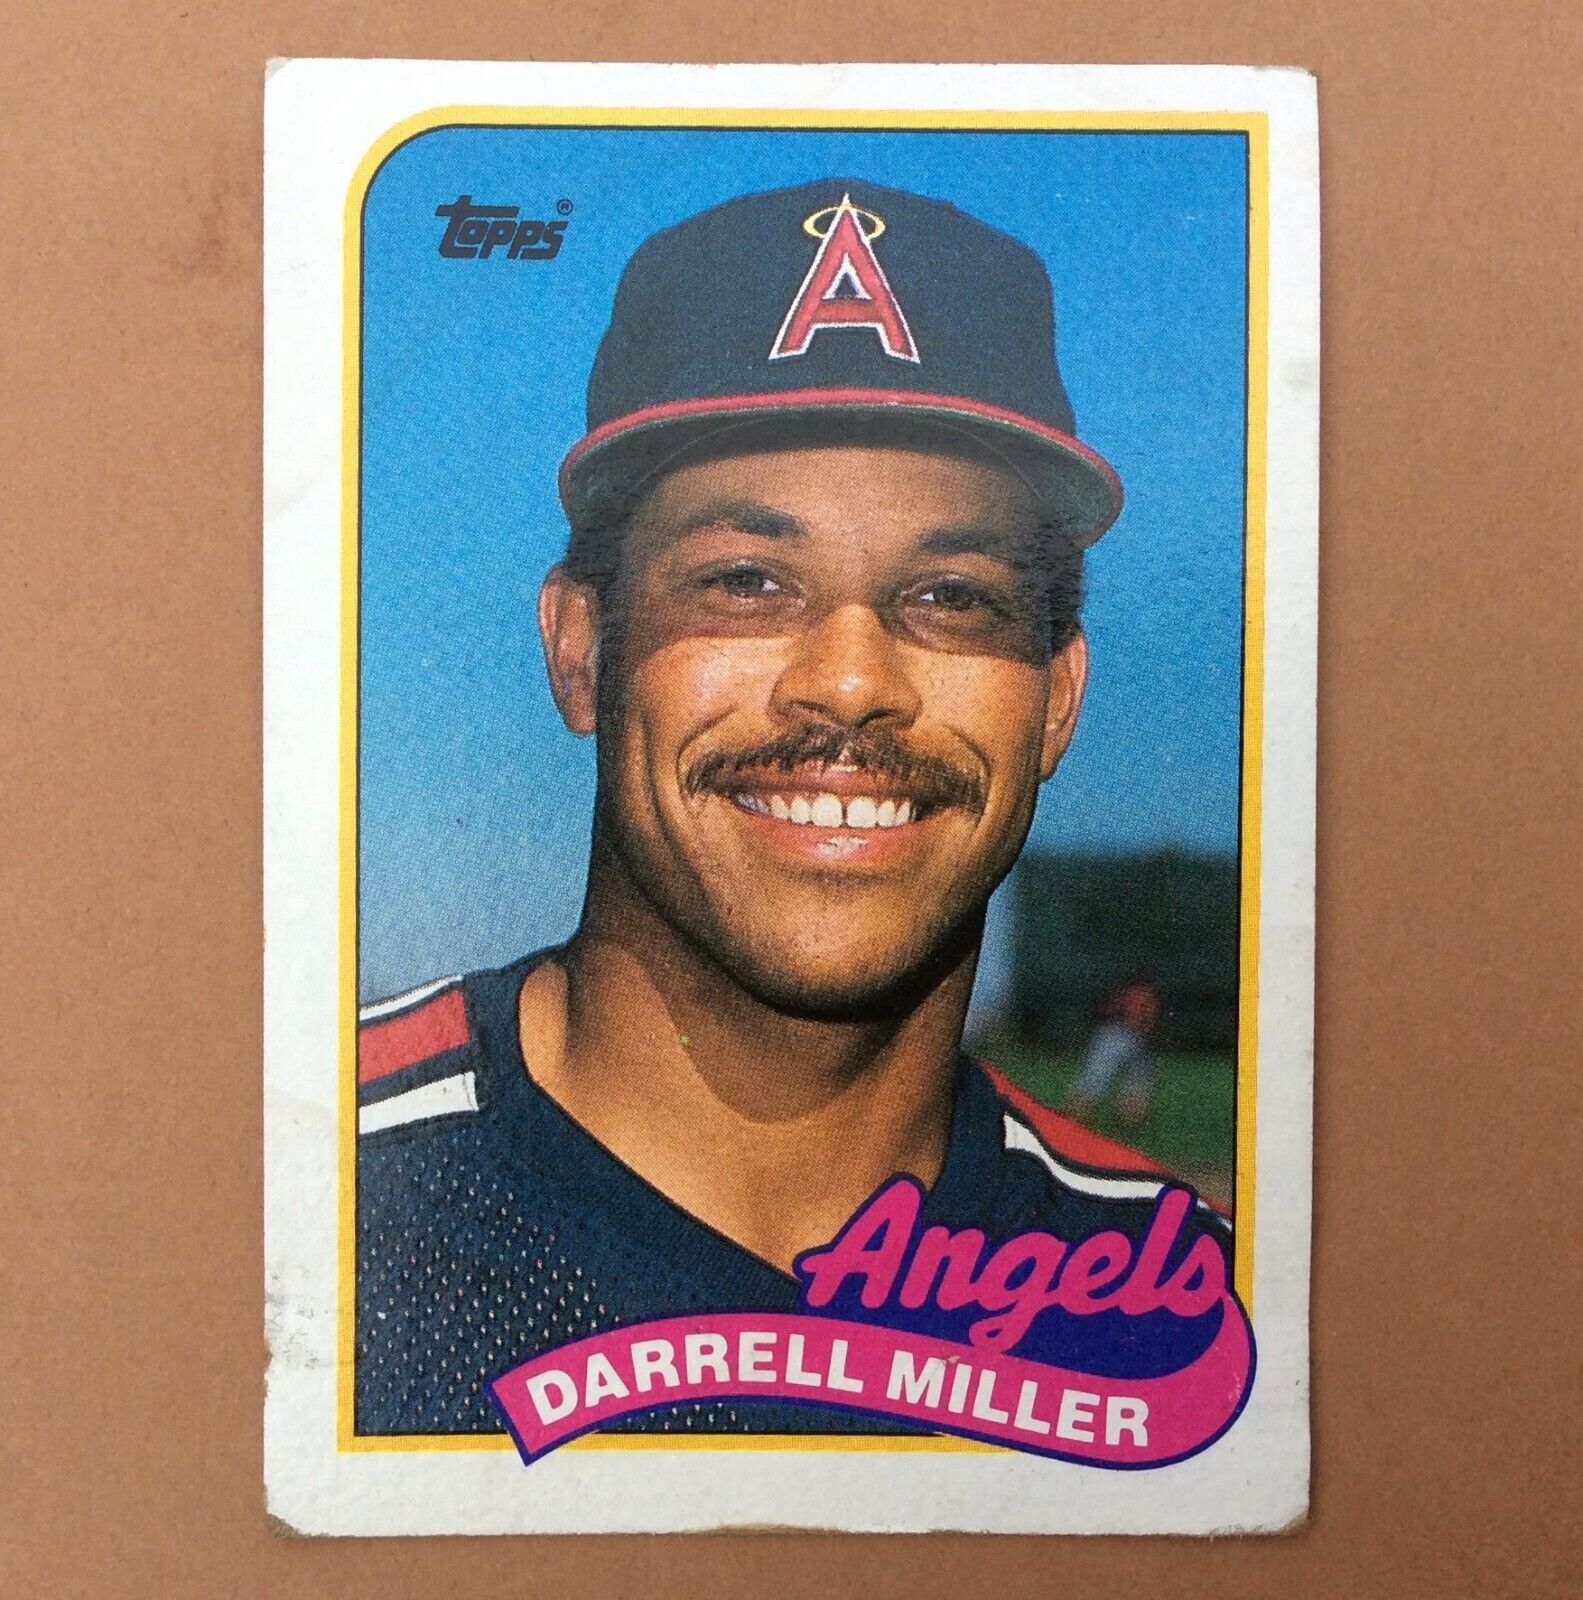 1989 TOPPS #68 DARRELL MILLER ANGELS Trading Card BASEBALL